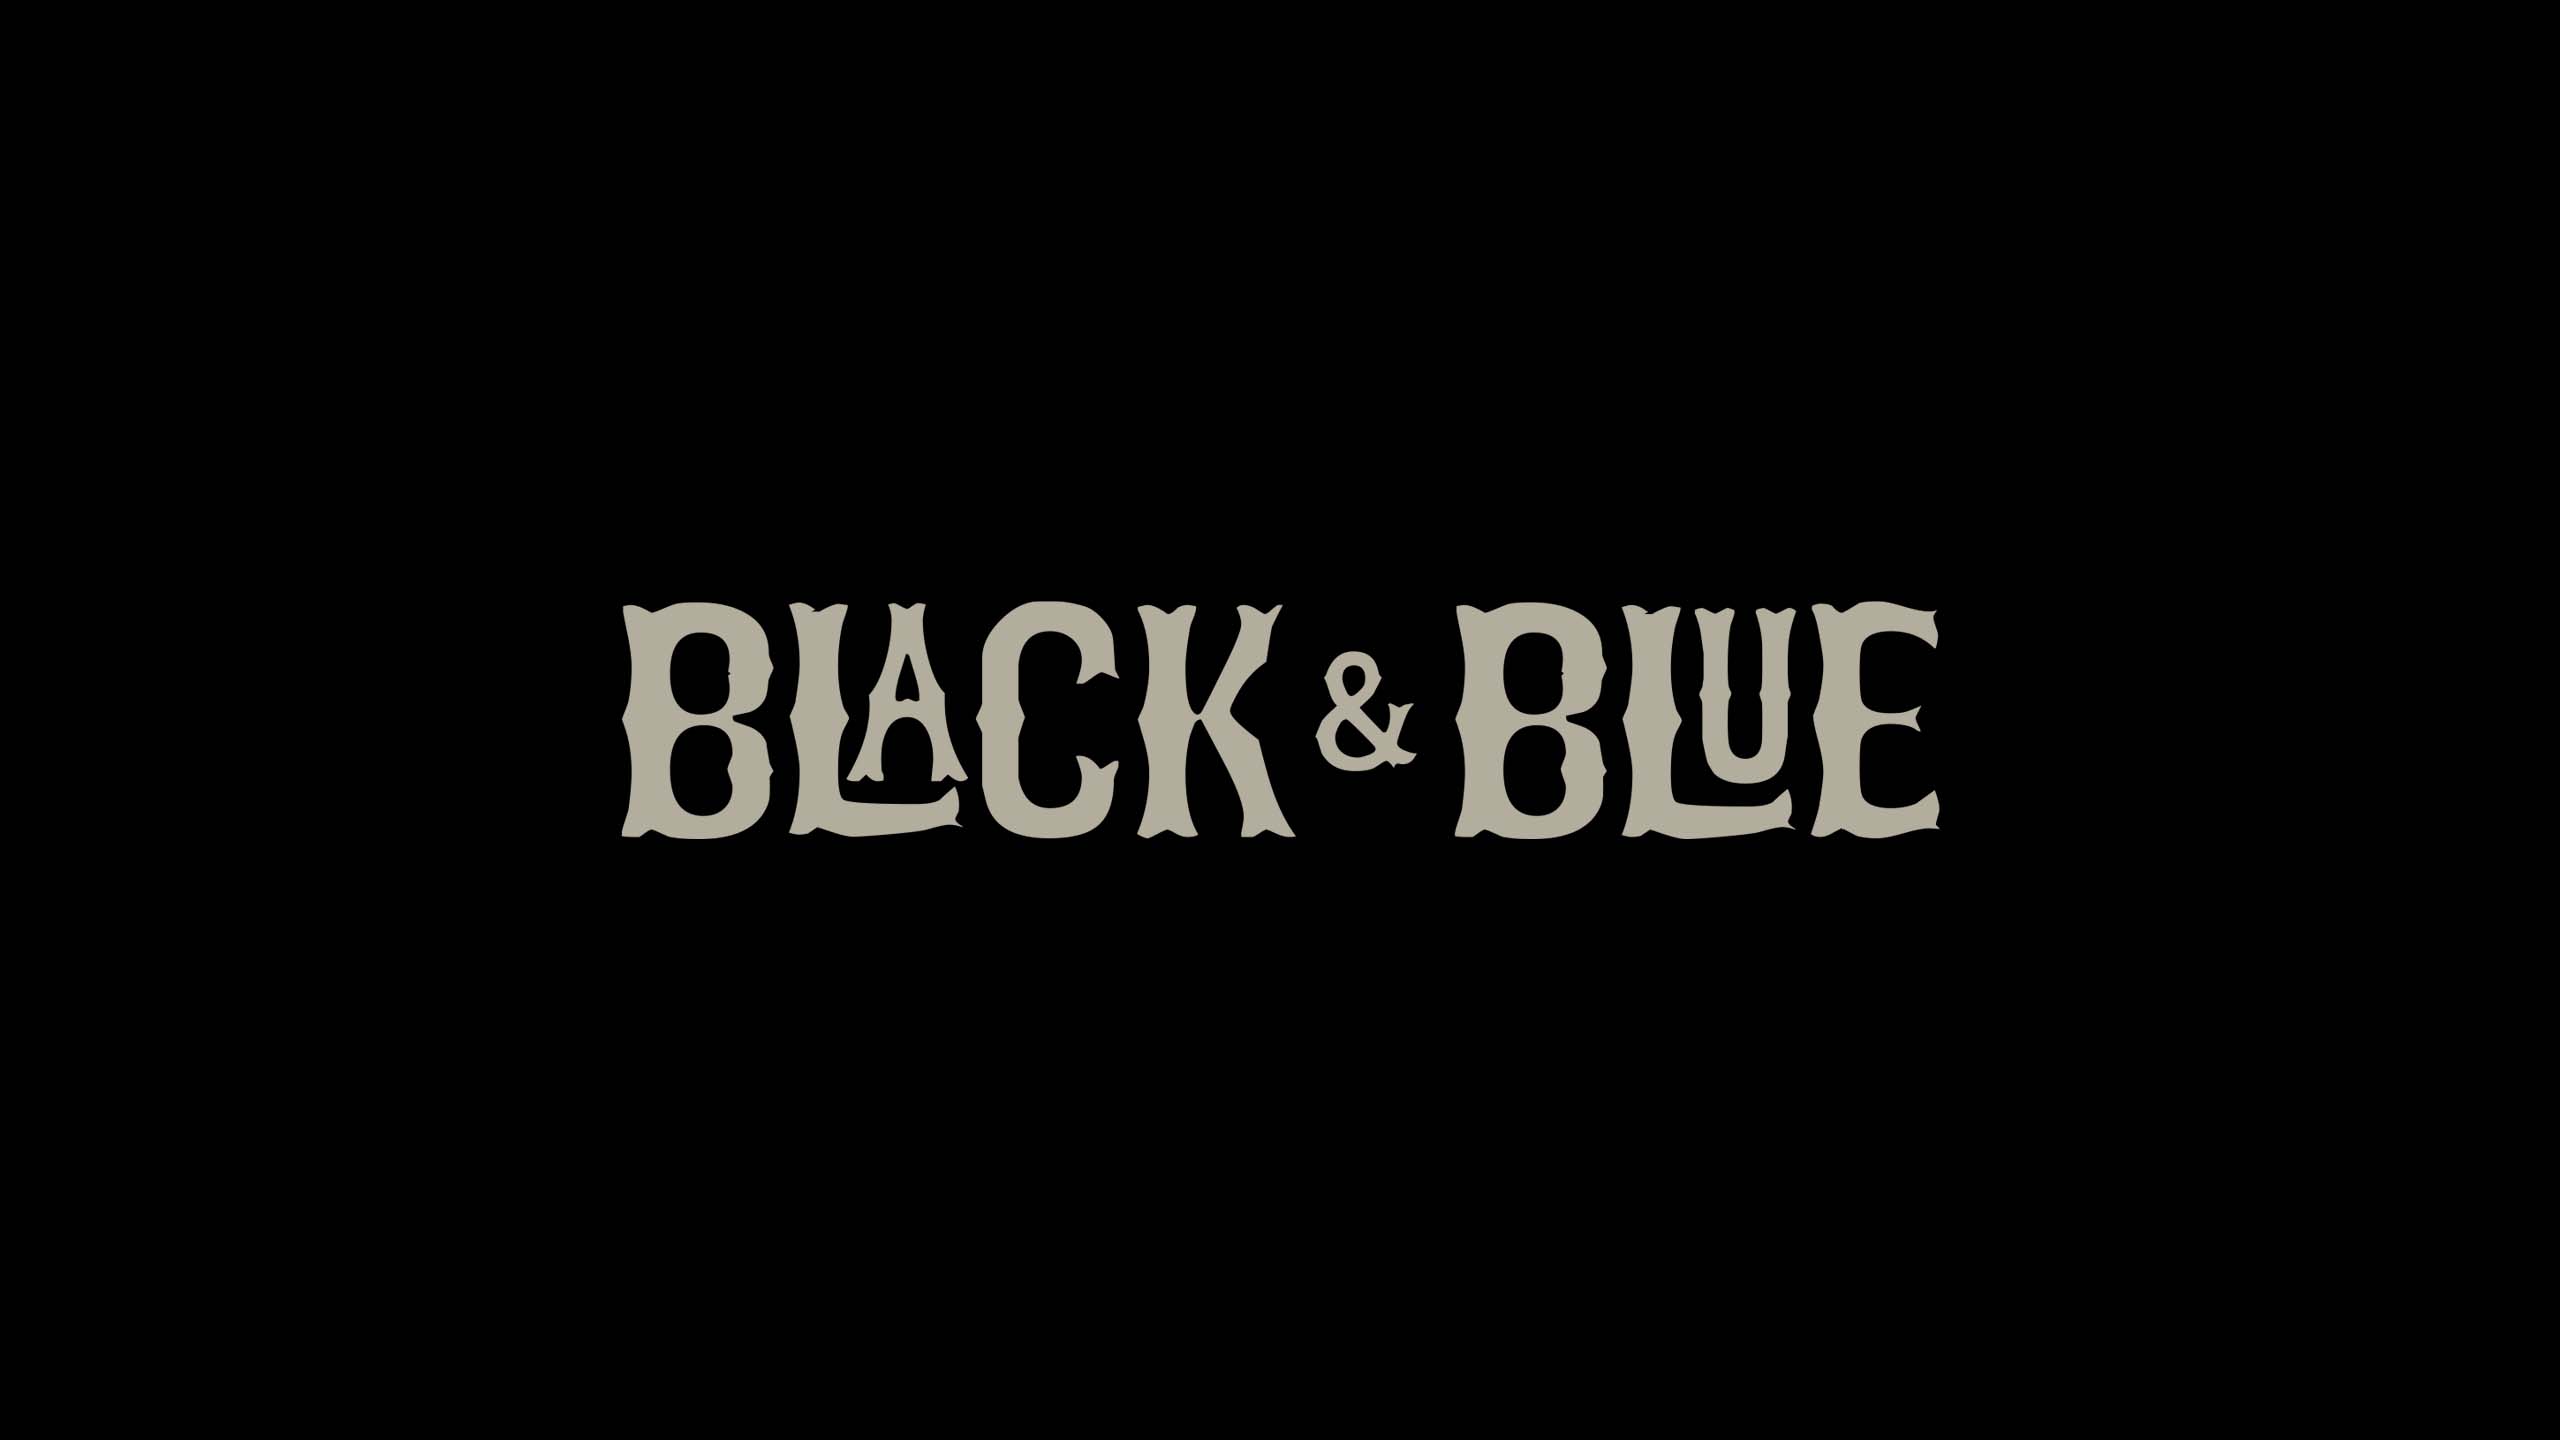 Black & Blue BBQ - Typografie